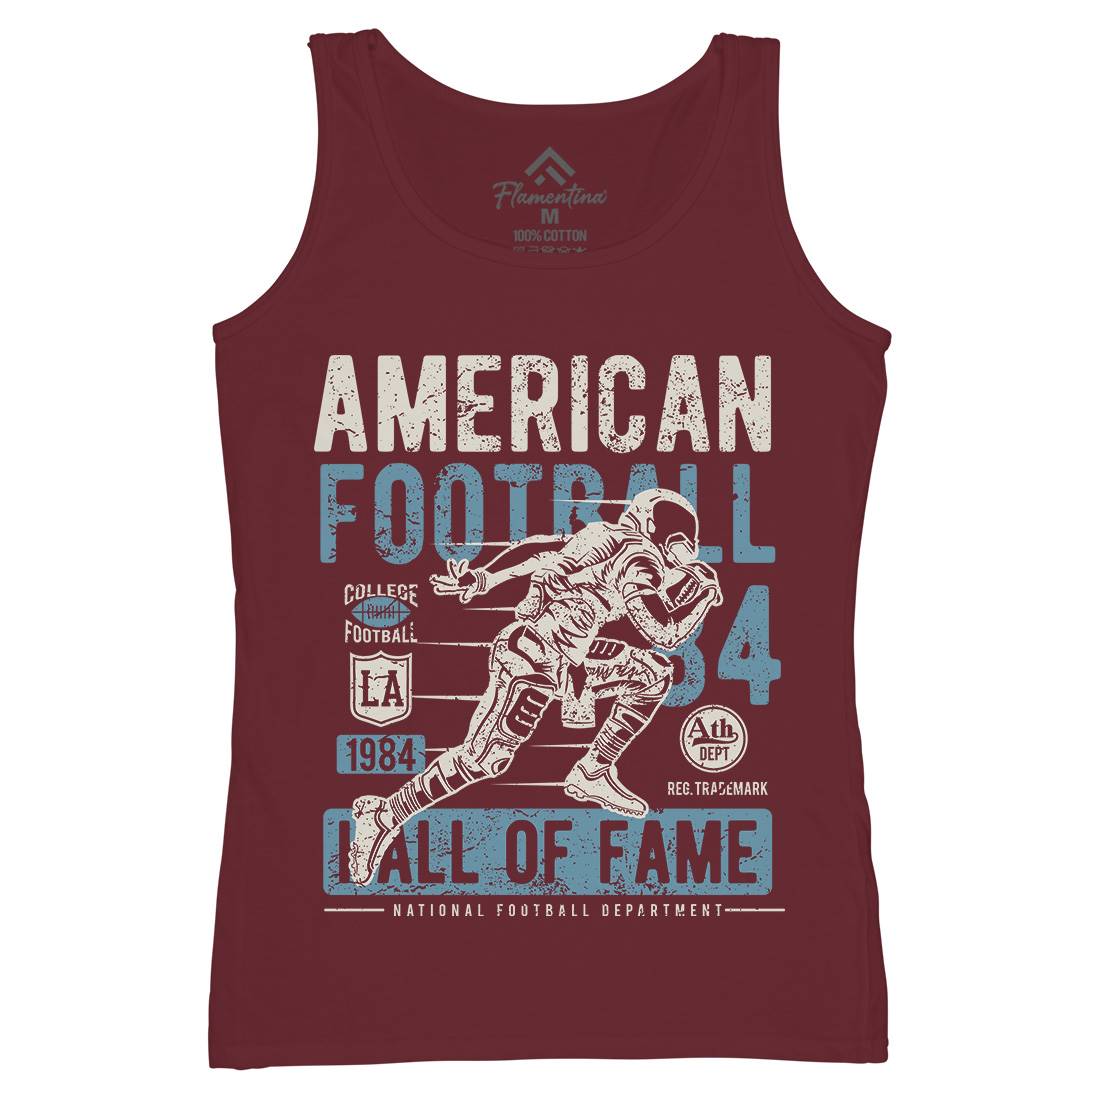 American Football Womens Organic Tank Top Vest Sport A006